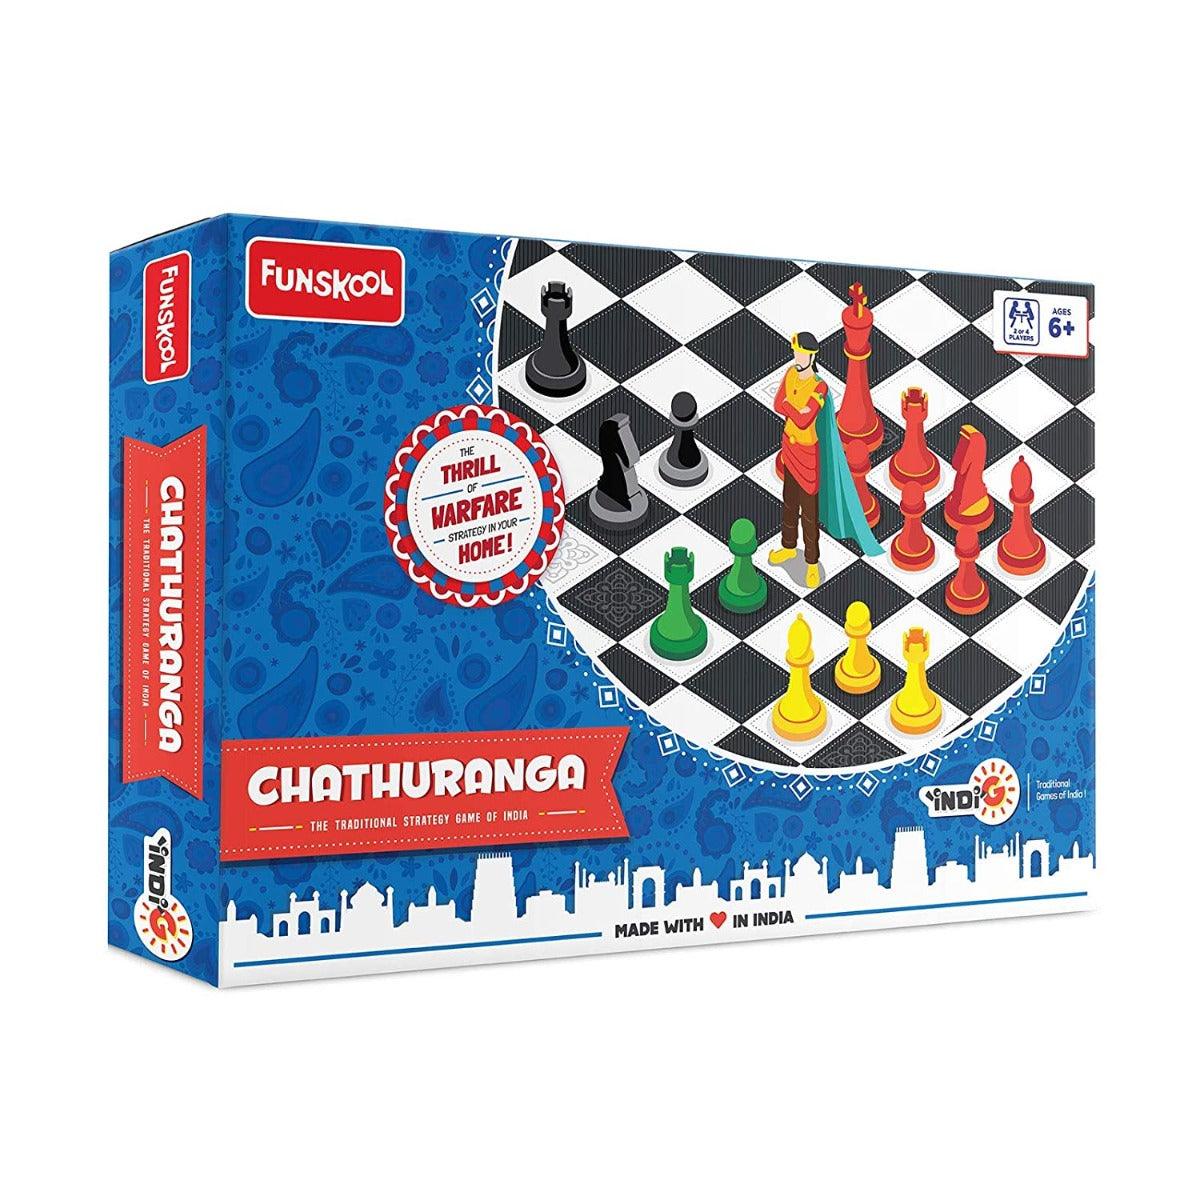 Funskool Chathuranga: The Traditional Tag Game of India